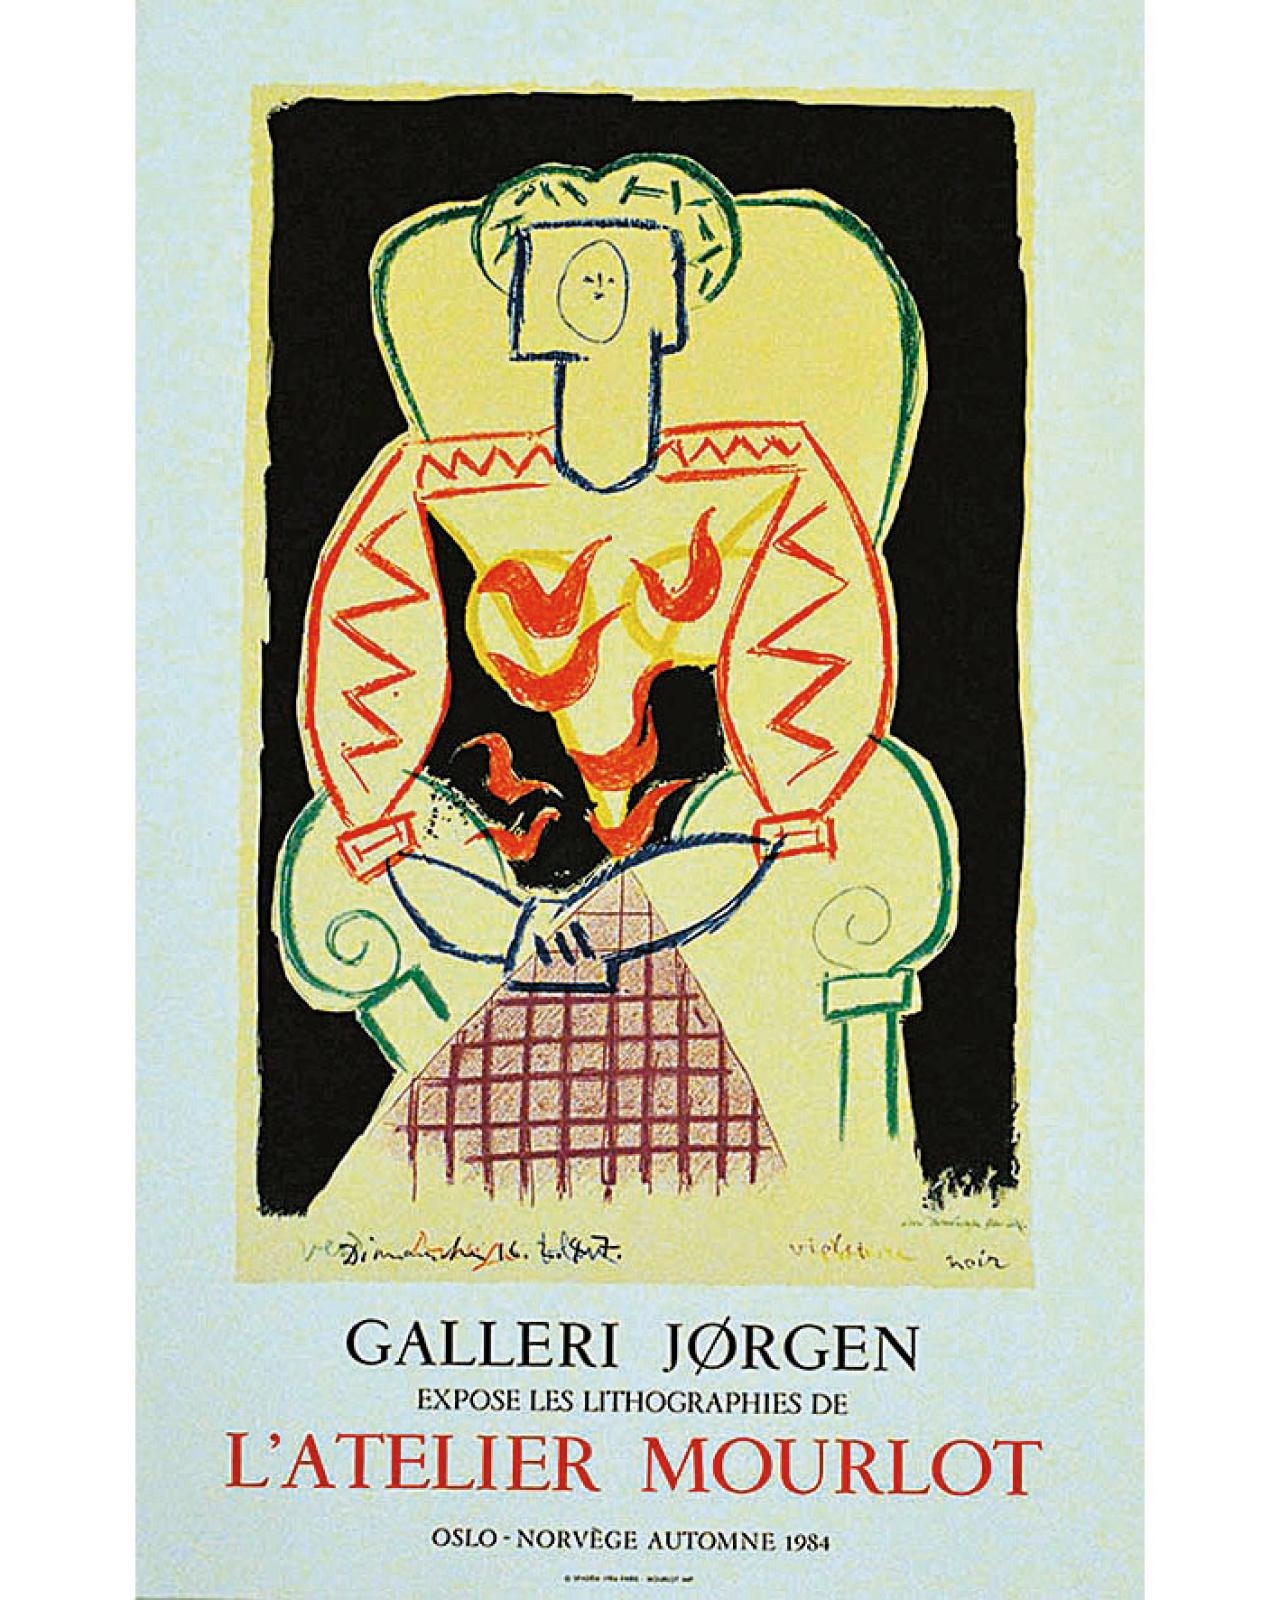 Pablo Picasso Gallerie Jorgen by Pablo Picasso, 1984